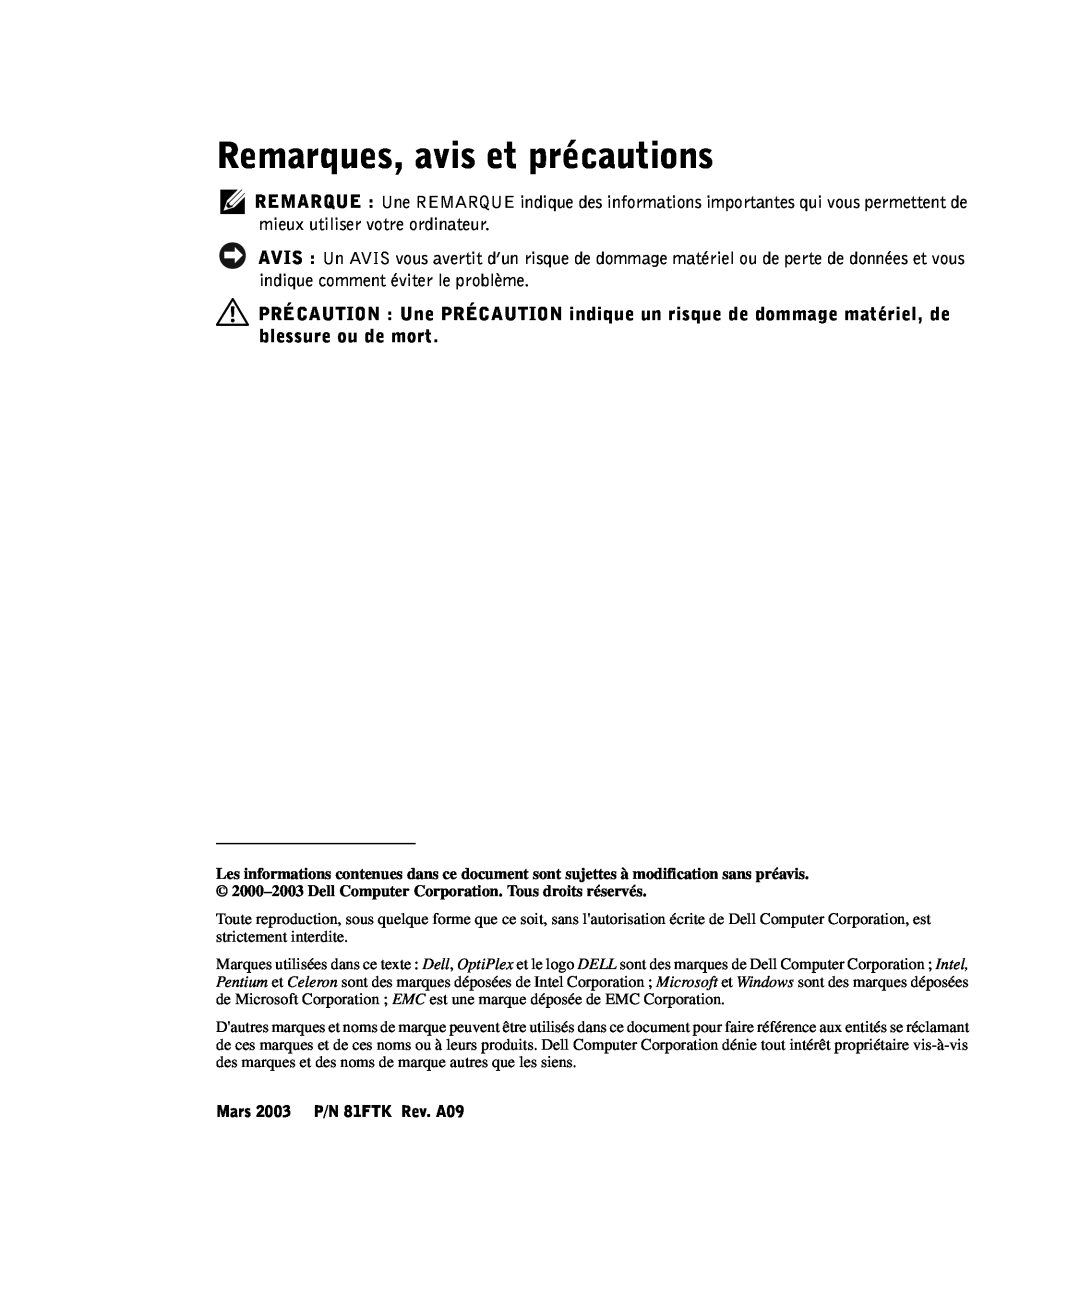 Dell manual Remarques, avis et précautions, Mars 2003 P/N 81FTK Rev. A09 